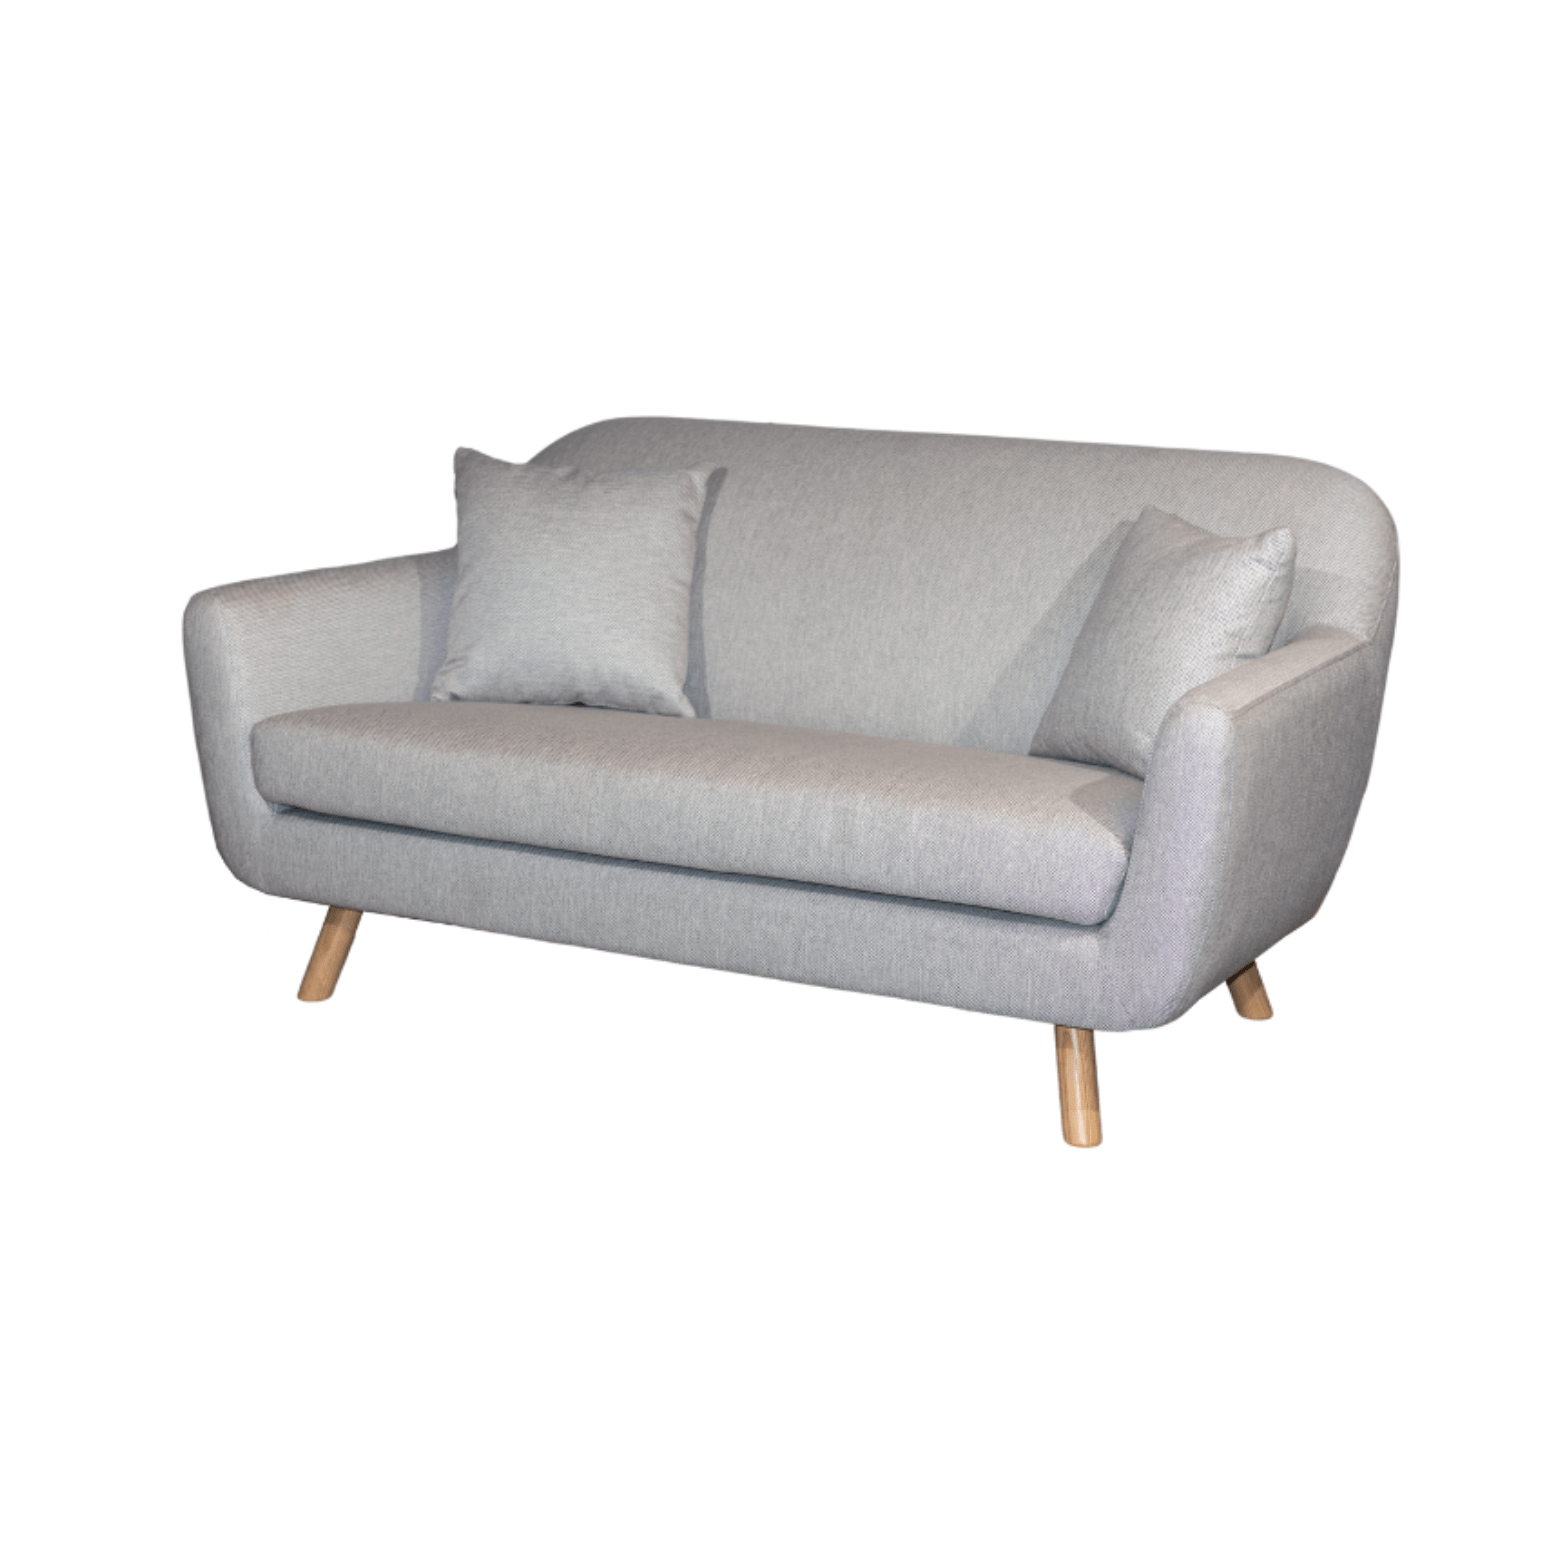 Sofa Urban Atria 2 1 Seater Fabric